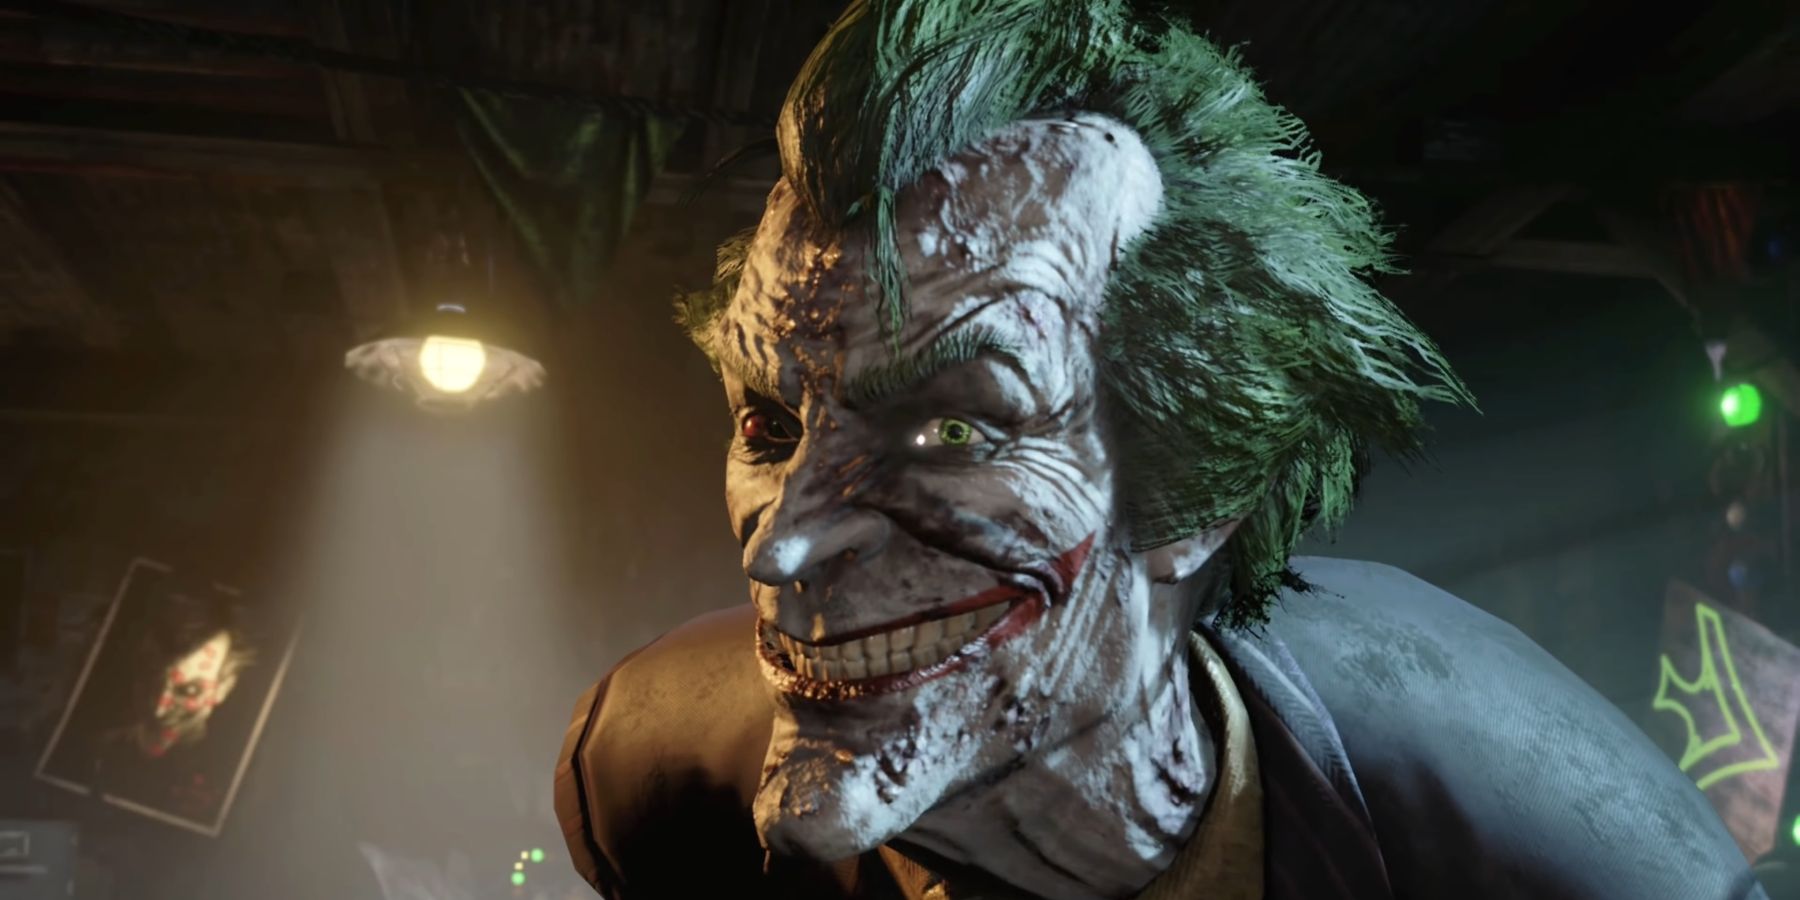 The Joker revealing his Titan affliction in Batman: Arkham City